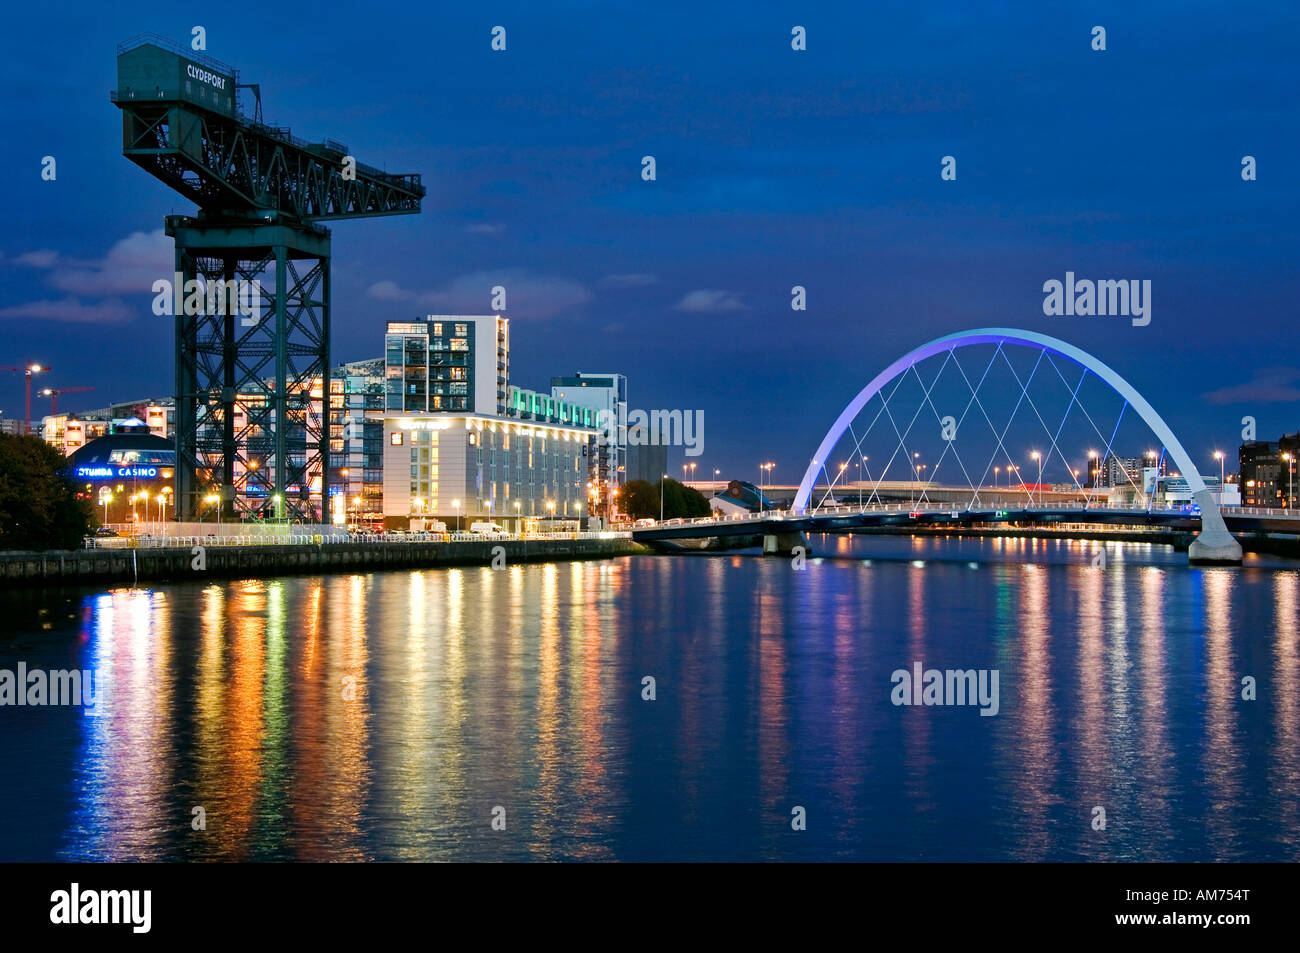 The River Clyde, Finnieston Crane, India Quay & Clyde Arc Bridge at Night, Glasgow, UK Stock Photo